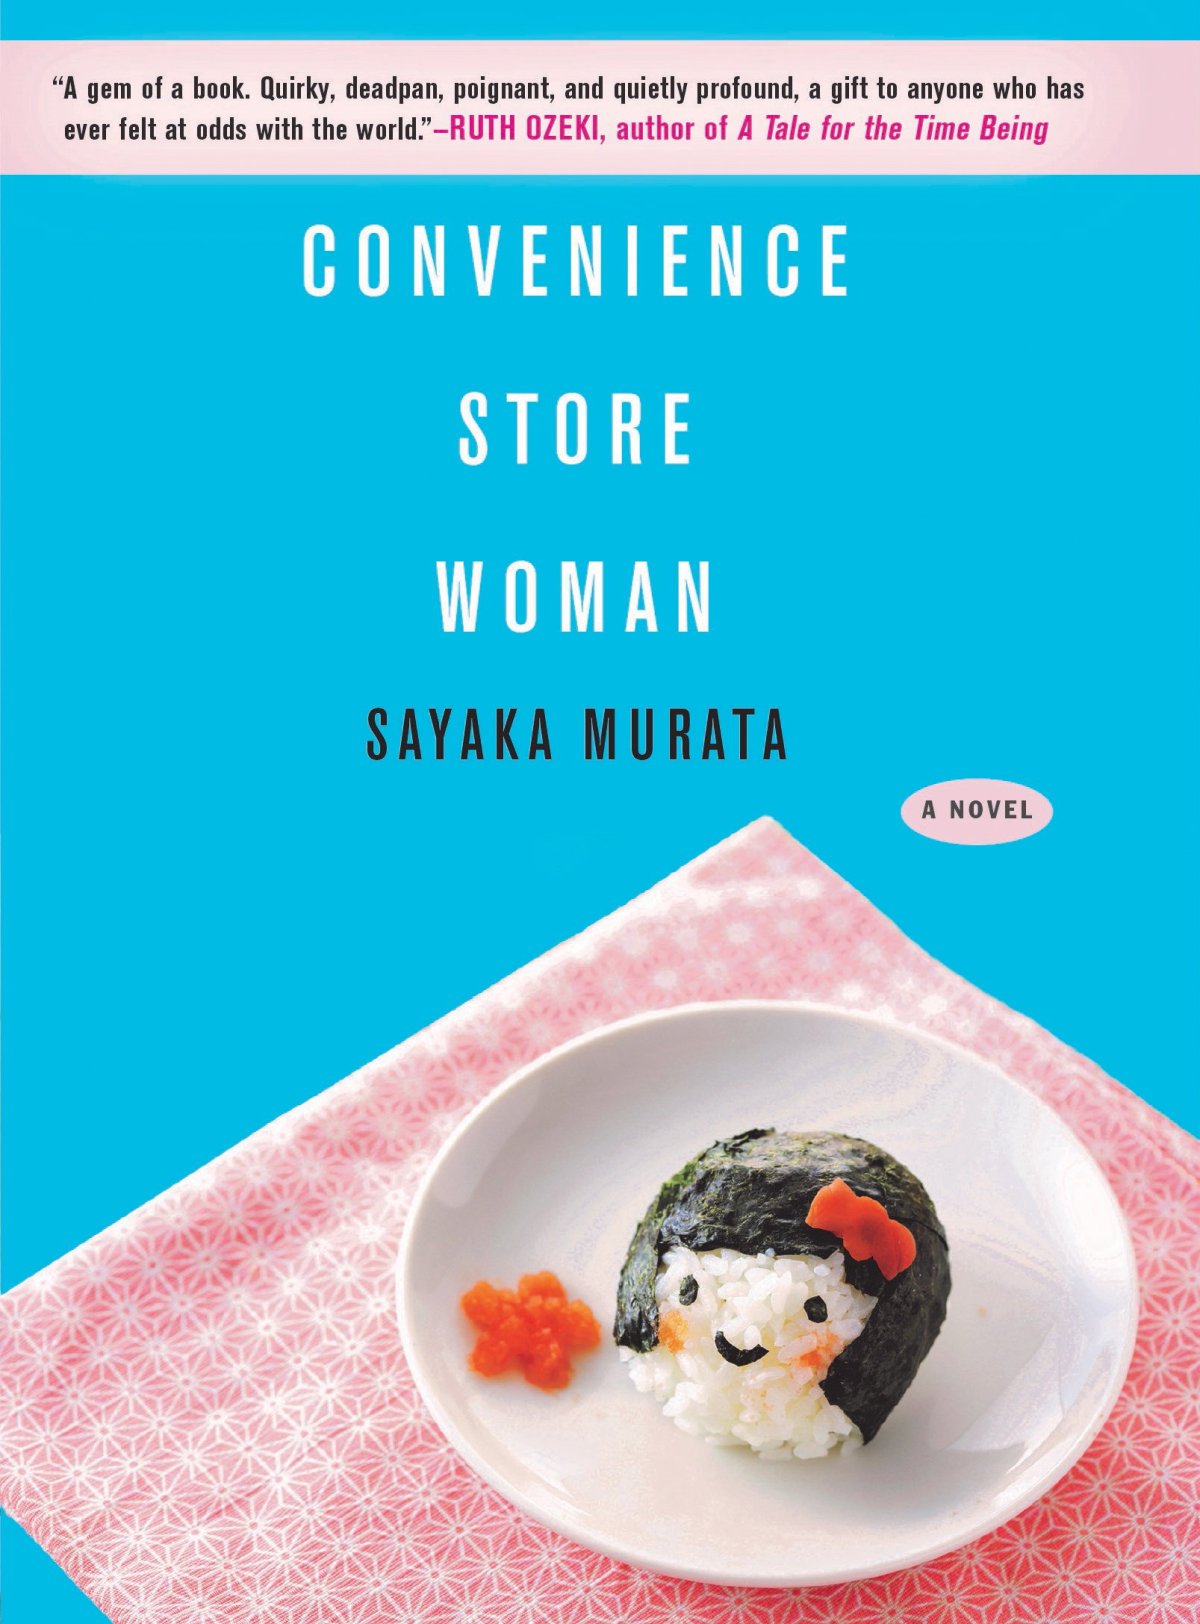 Book 24 – Convenience Store Woman by Sayaka Murata